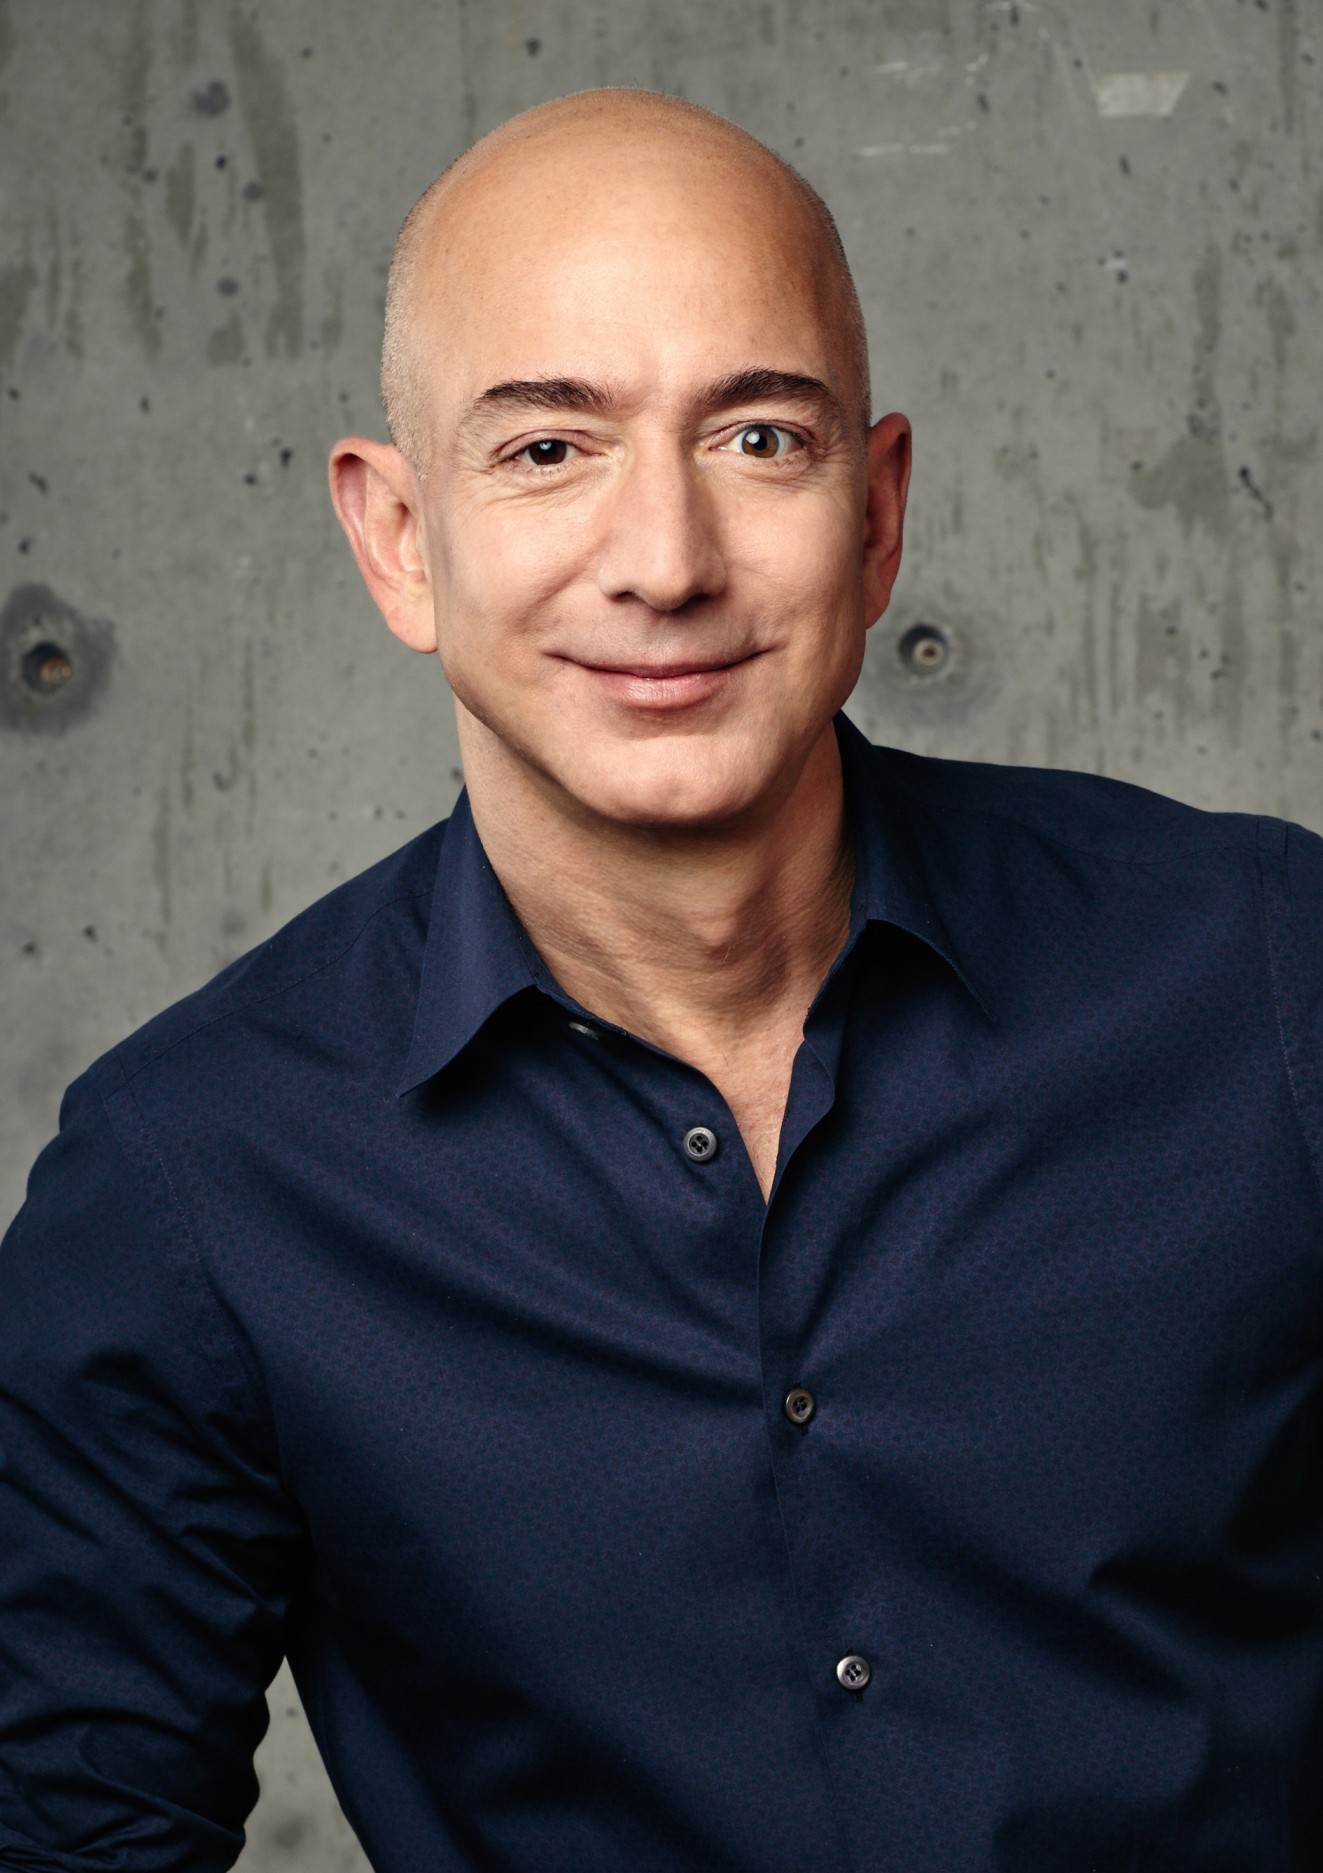 How tall is Jeff Bezos?